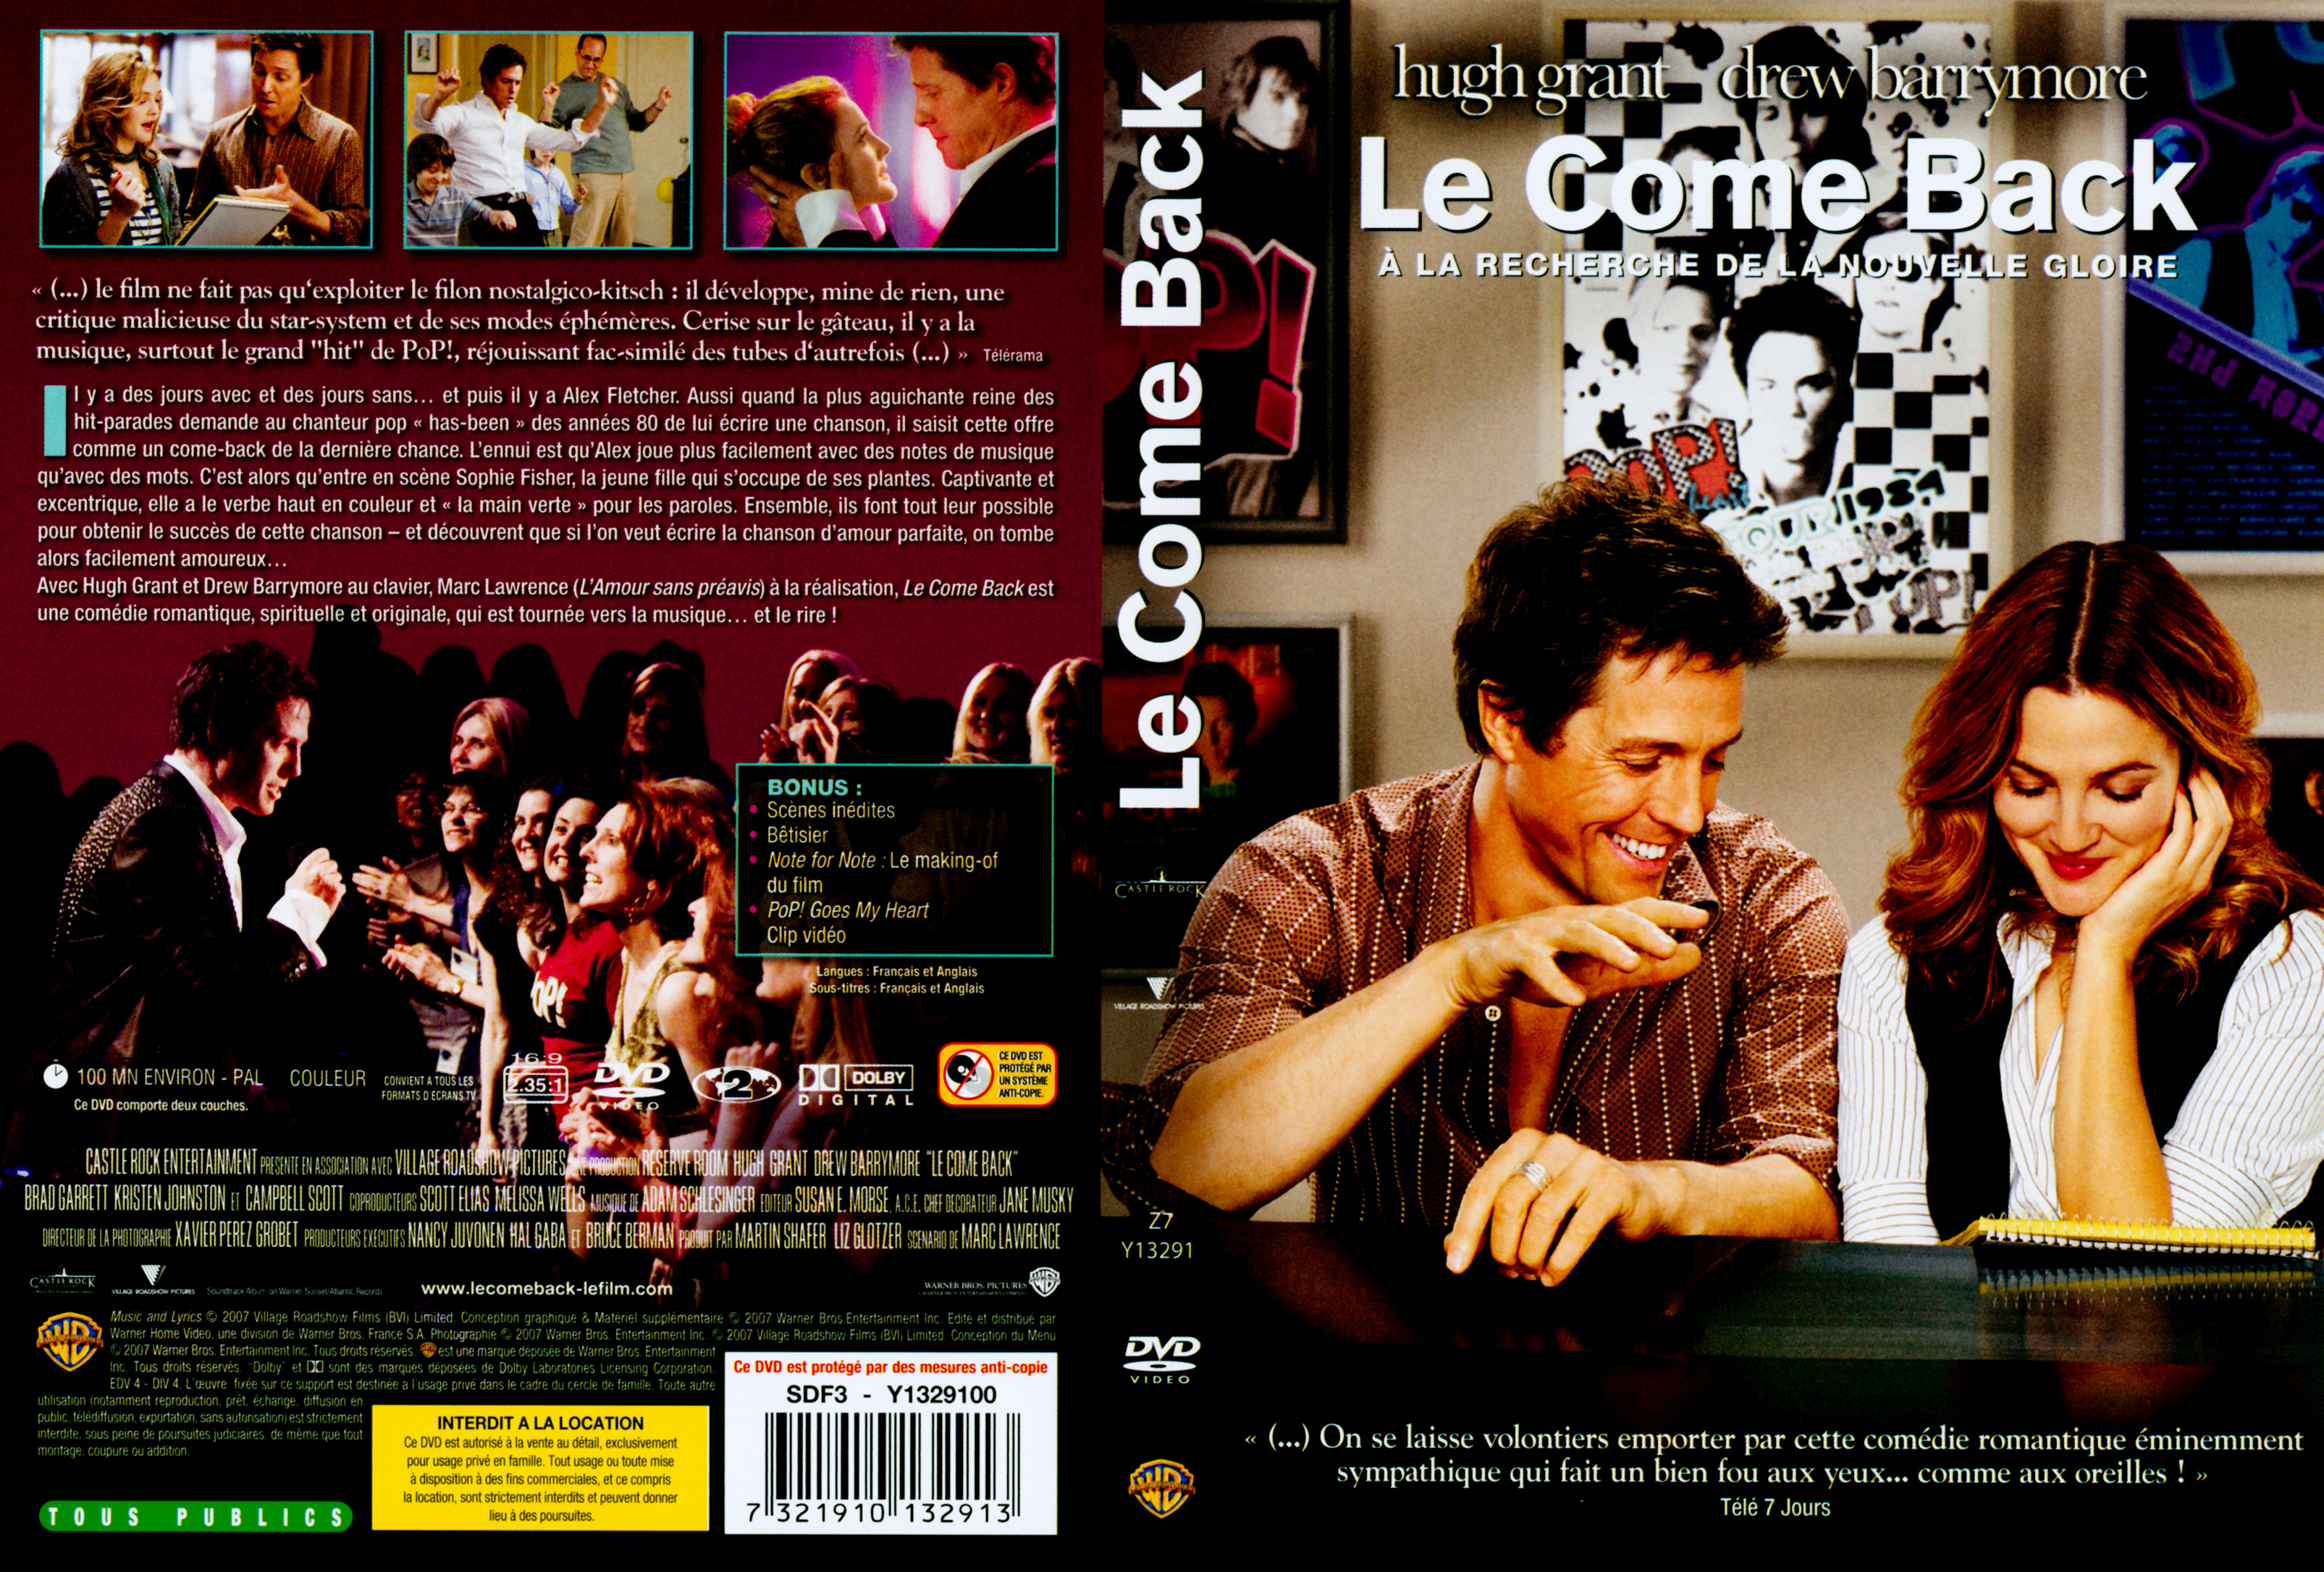 Jaquette DVD Le come back v2